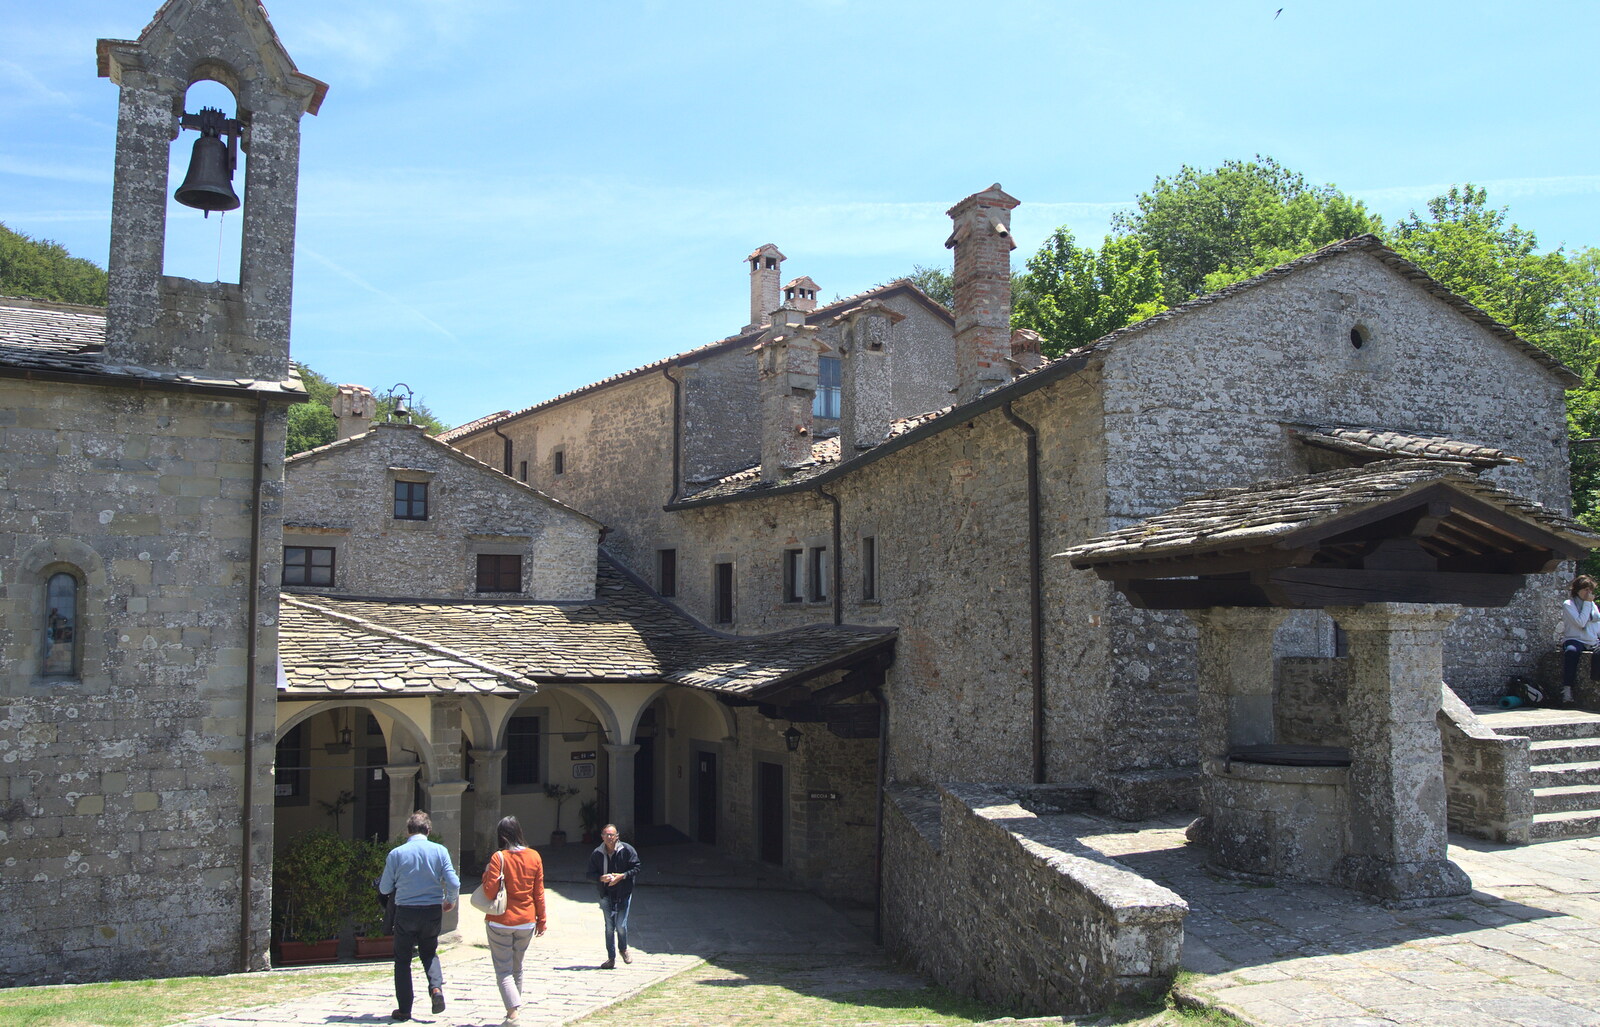 The monastery of La Verna from La Verna Monastery and the Fireflies of Tuscany, Italy - 14th June 2013